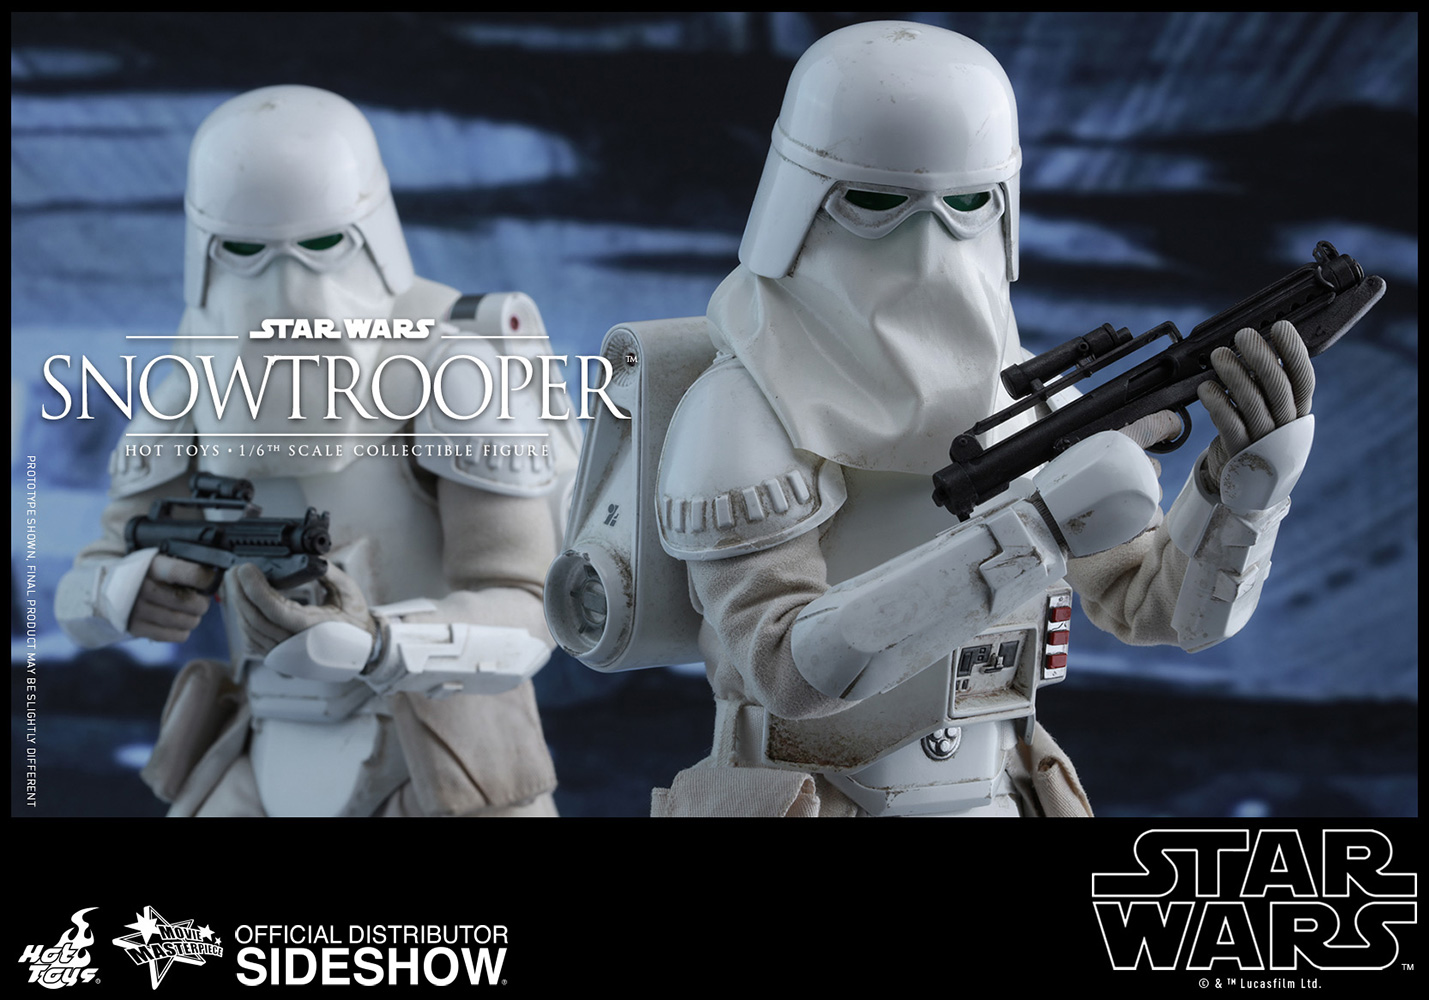 The-Empire-Strikes-Back-Snowtrooper-figure-08